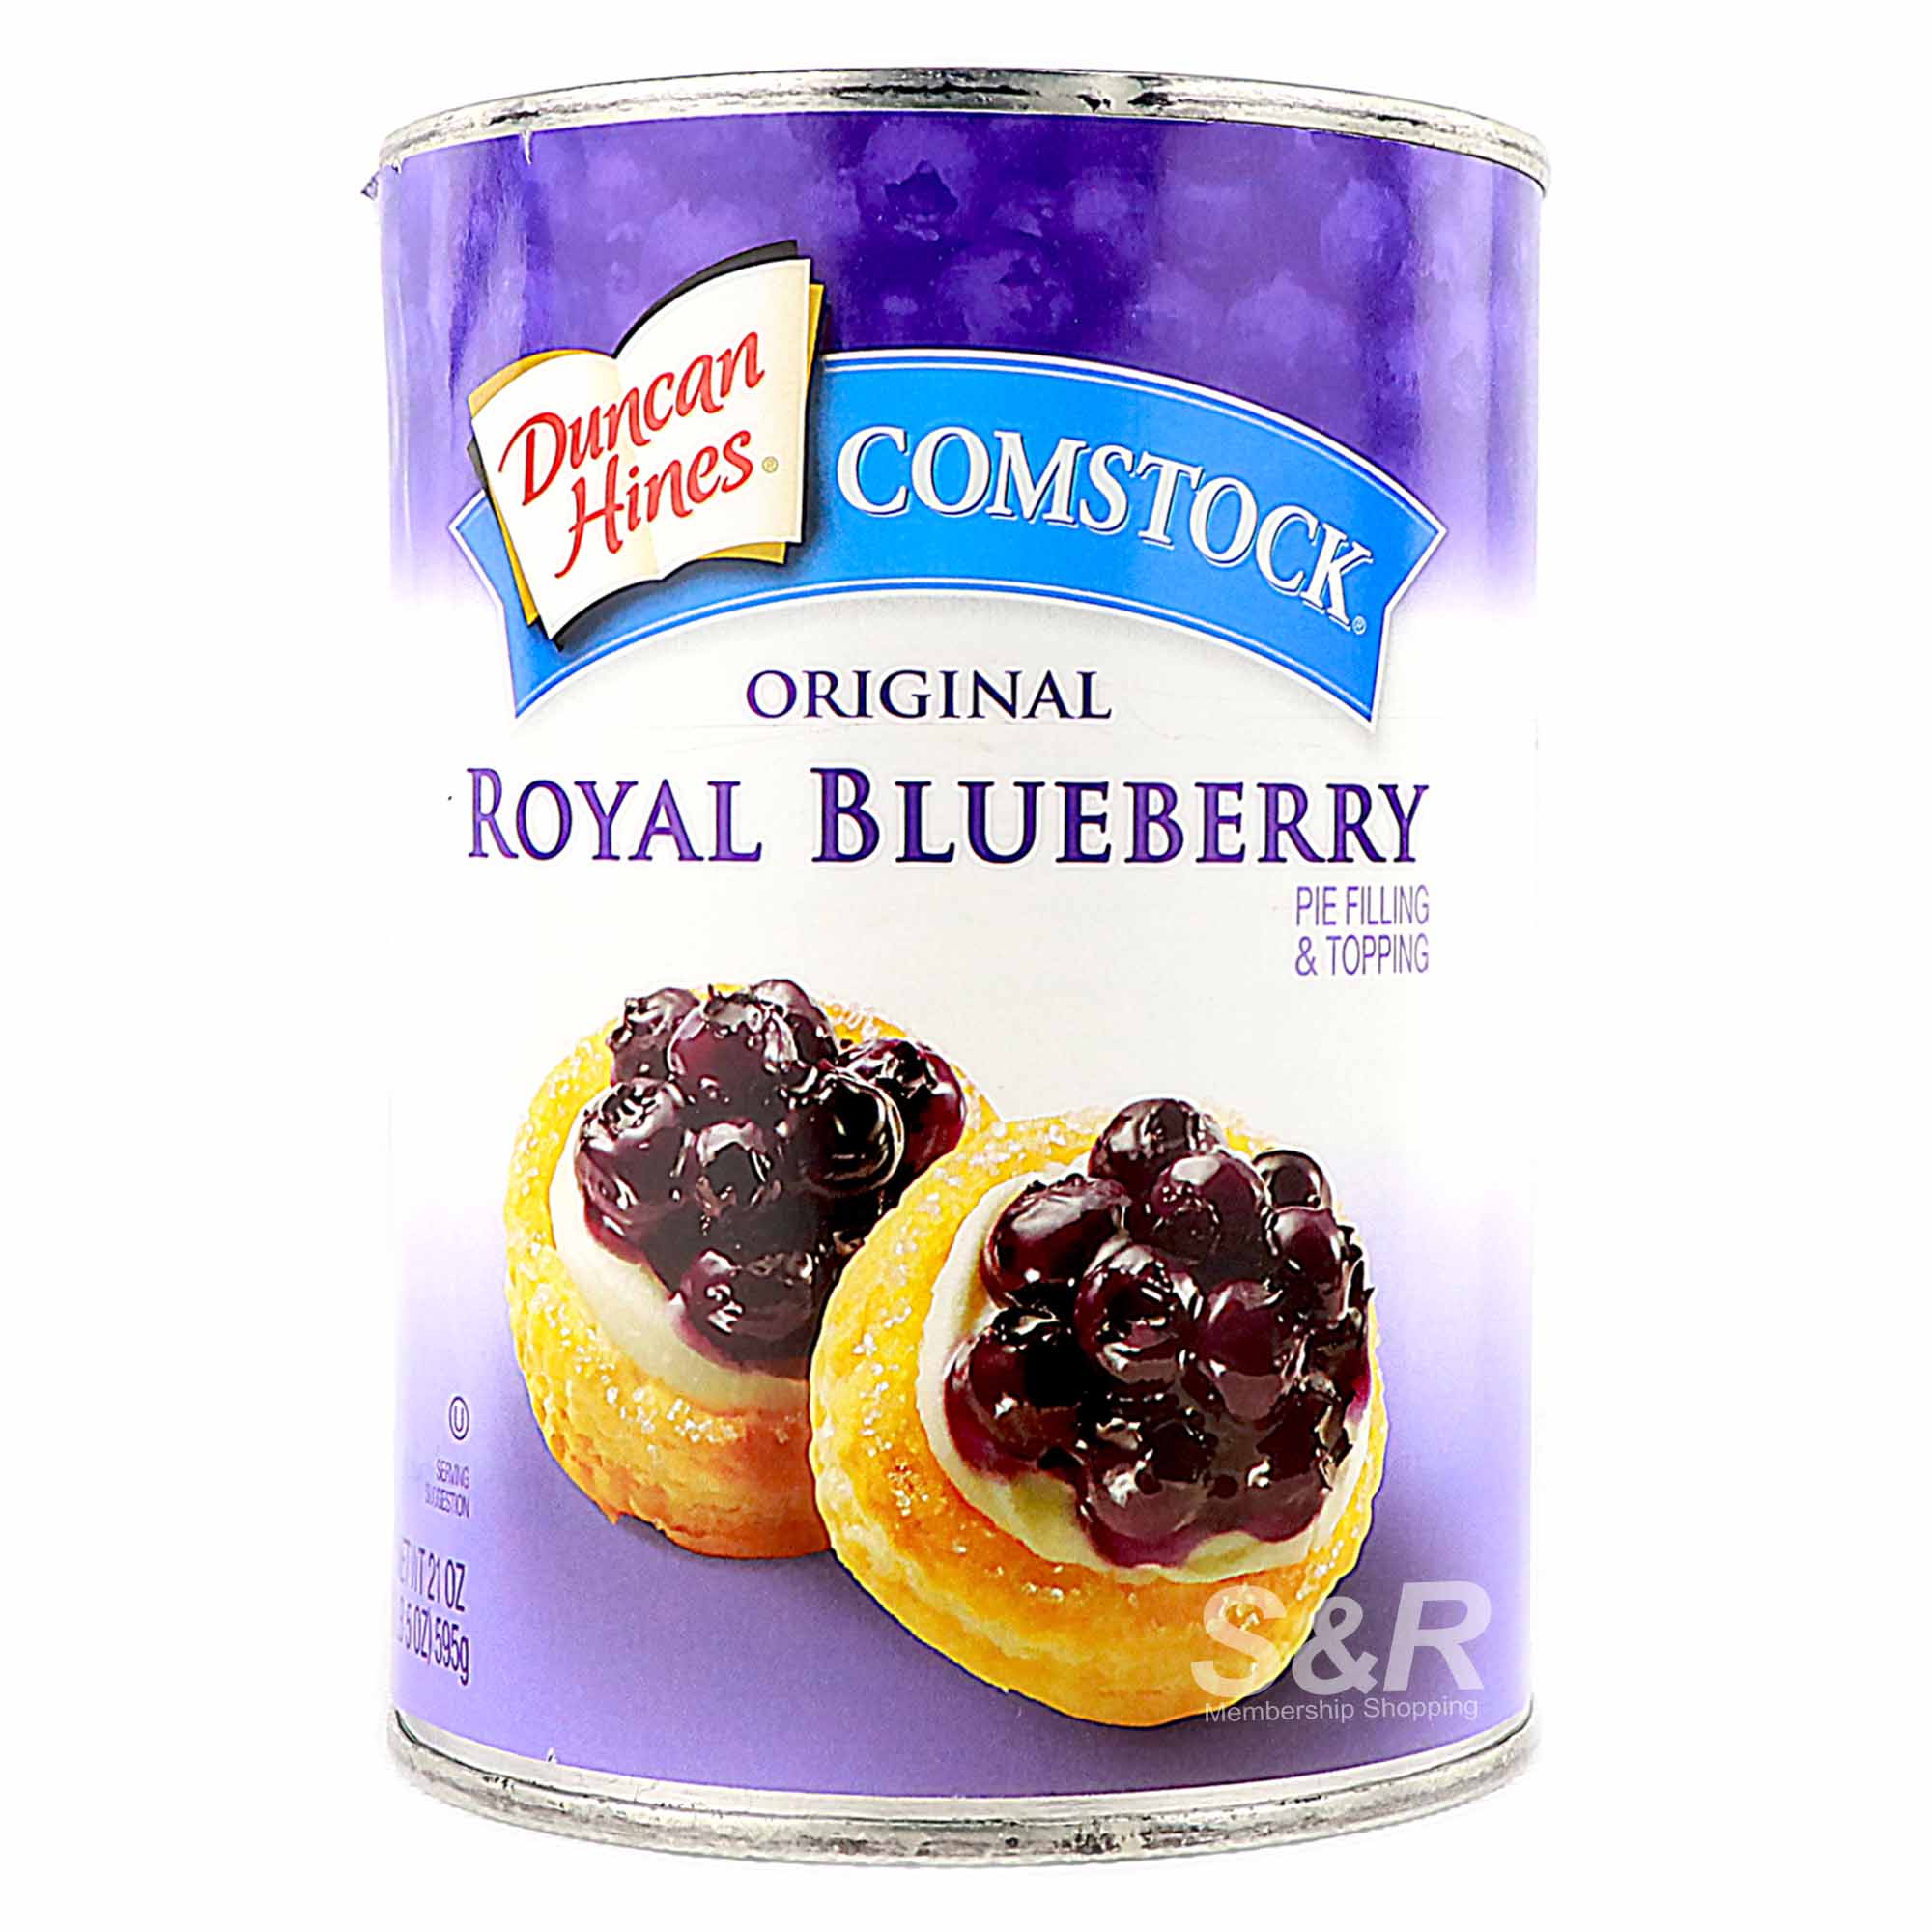 Duncan Hines Comstock Original Royal Blueberry 595g